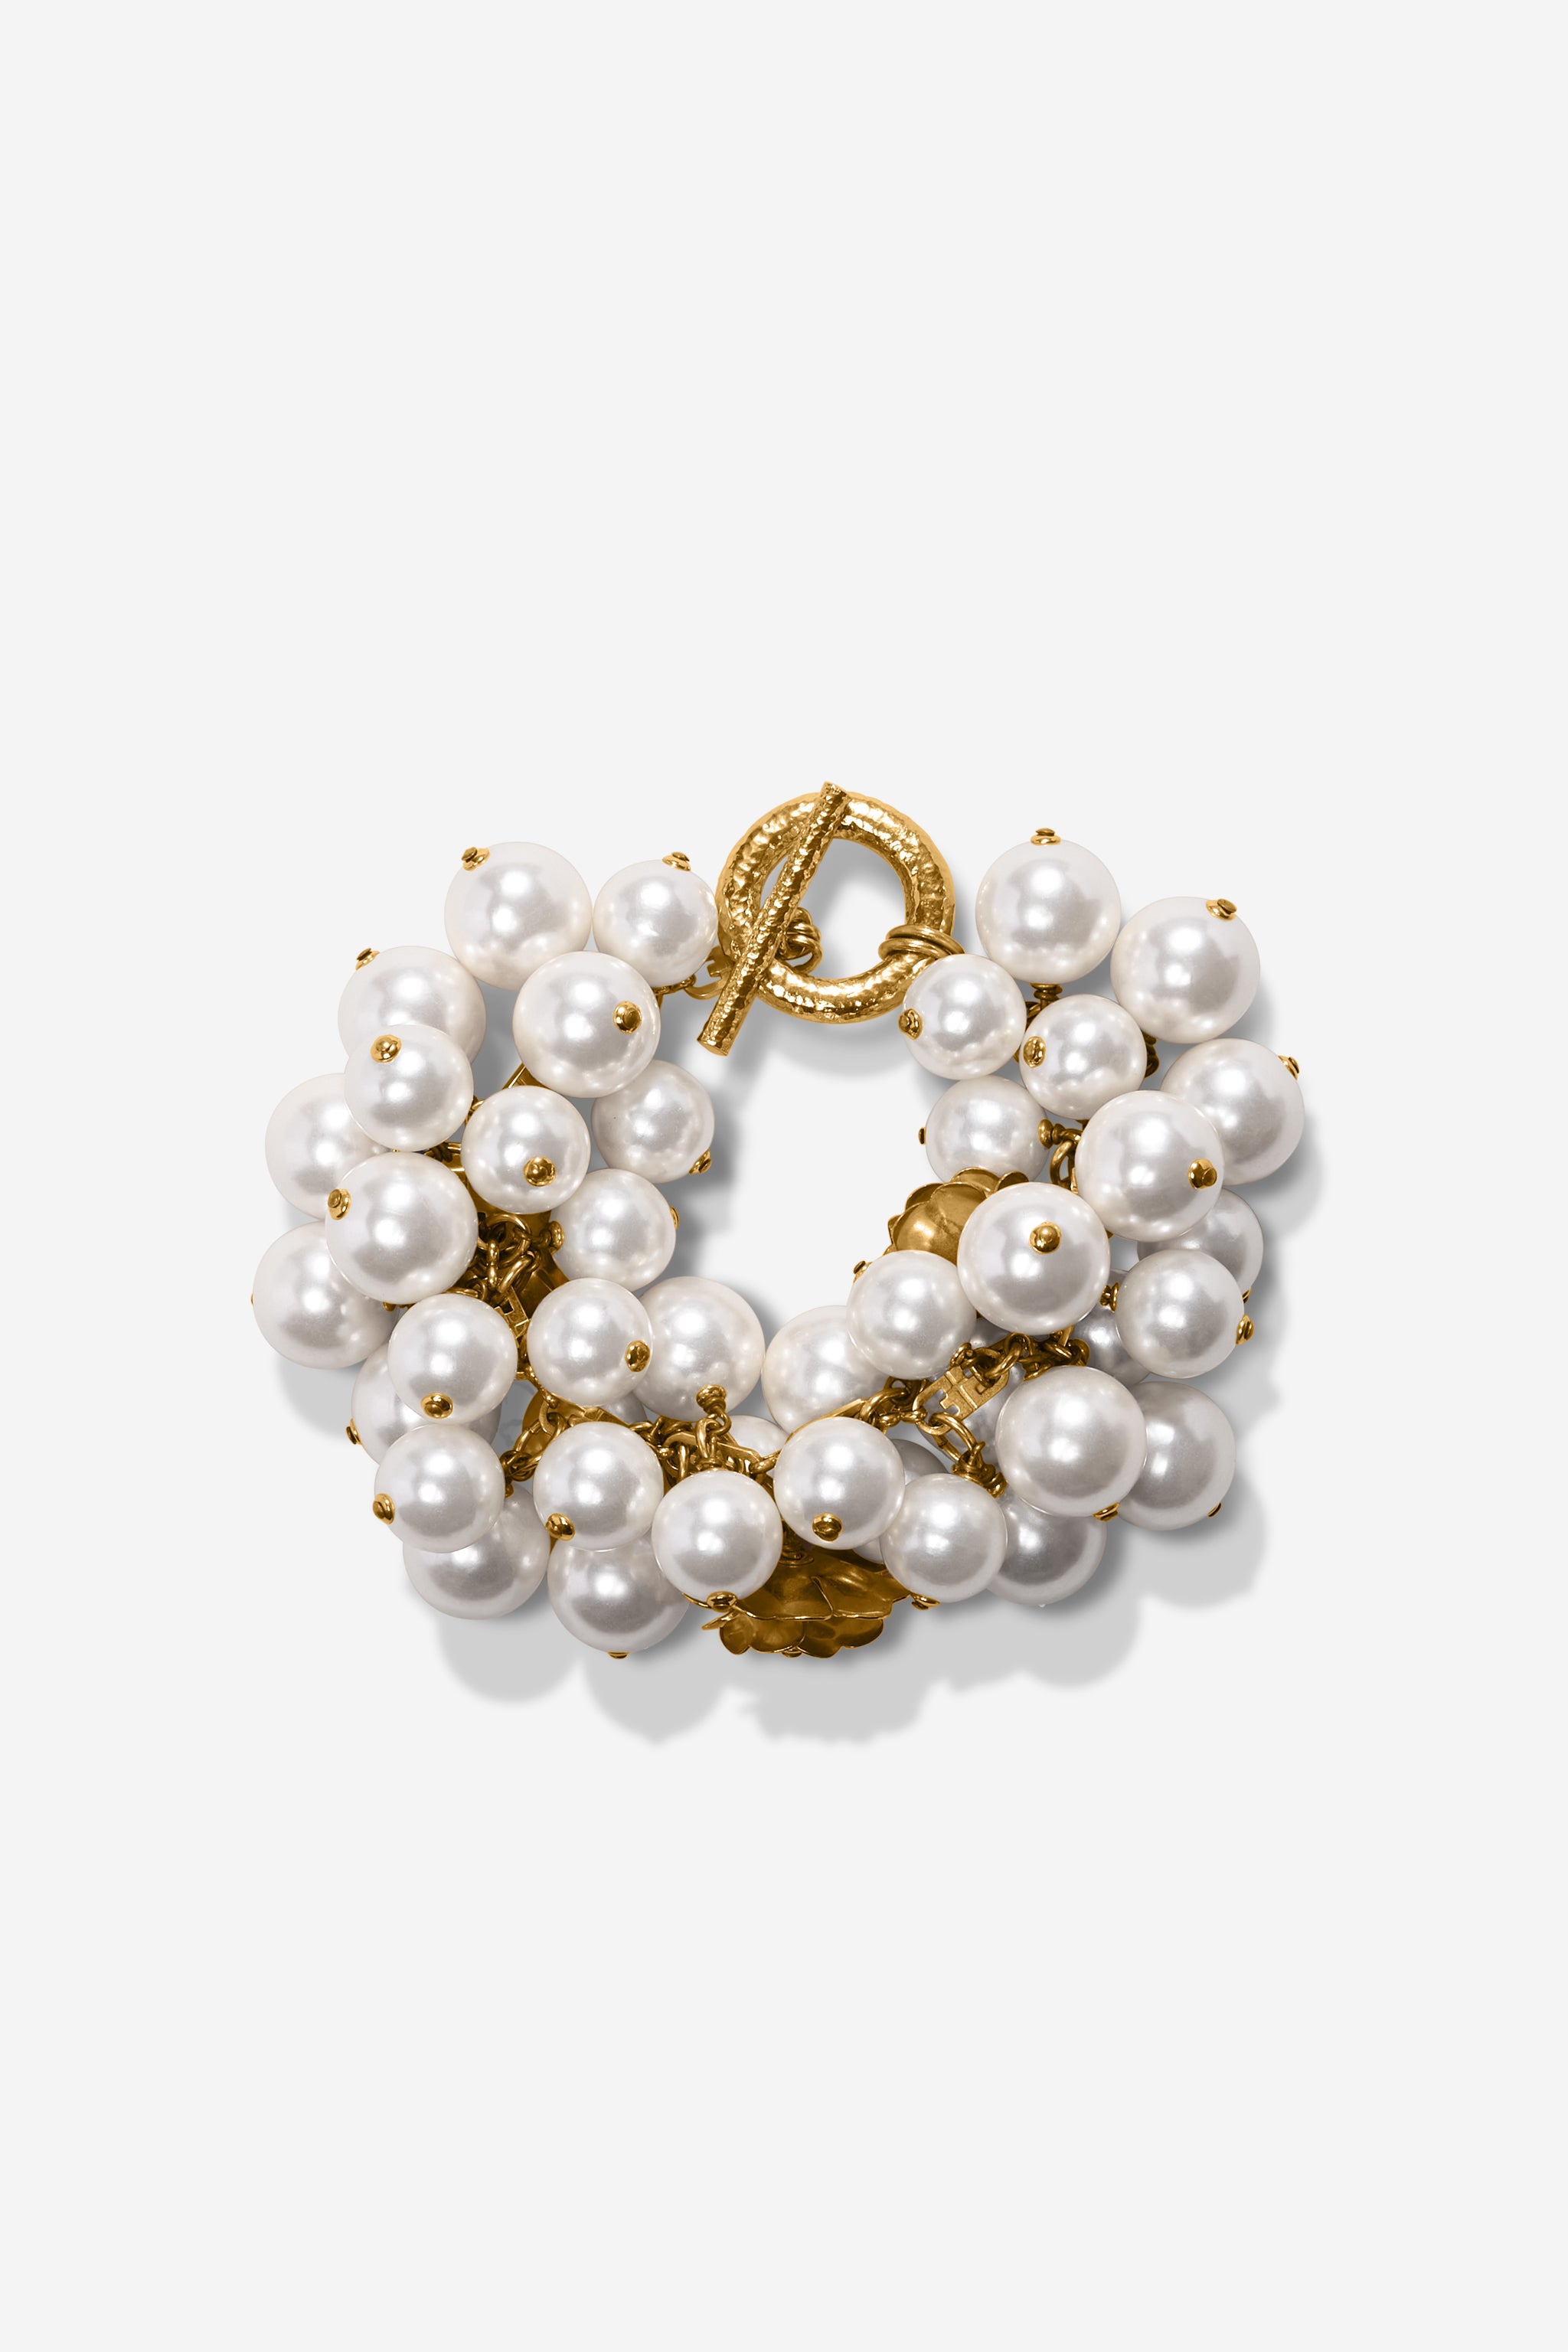 Pearl and flower bracelet